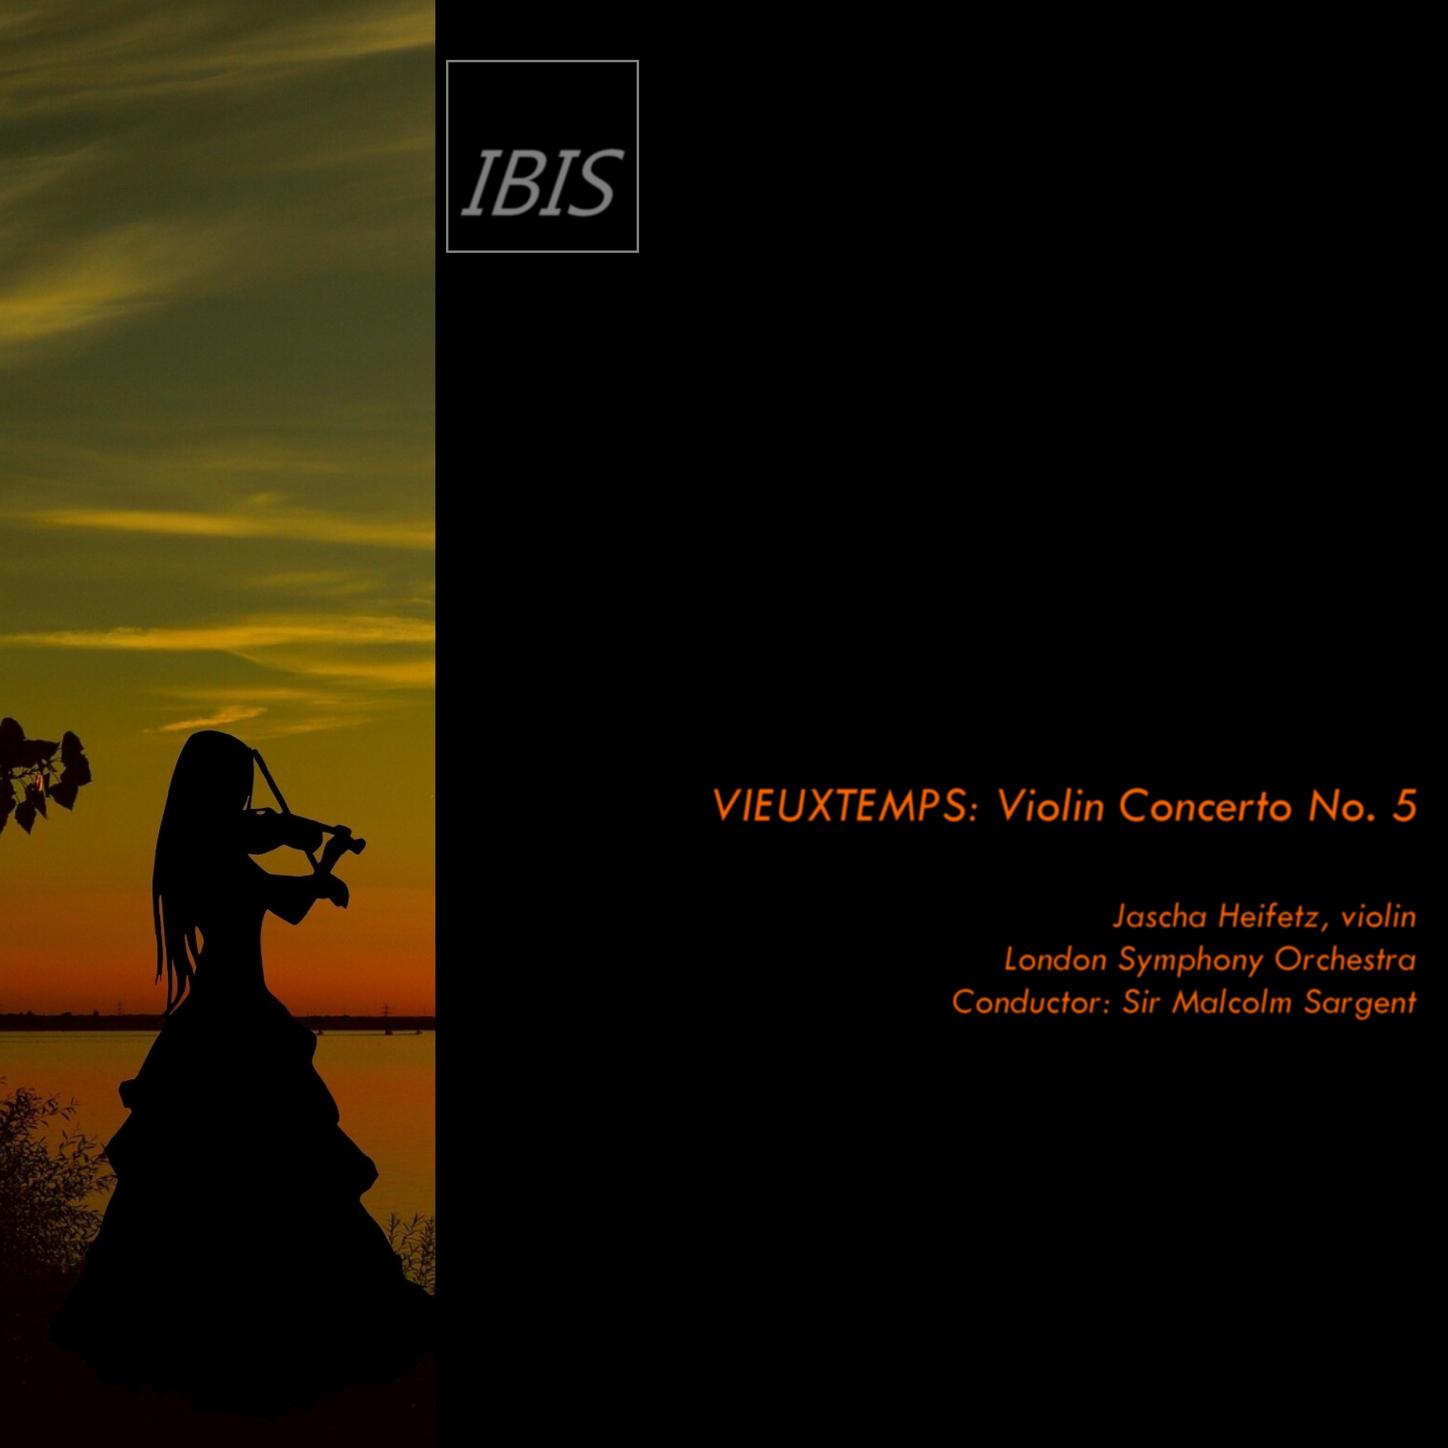 Vieuxtemps: Violin Concerto No.5, Op. 37